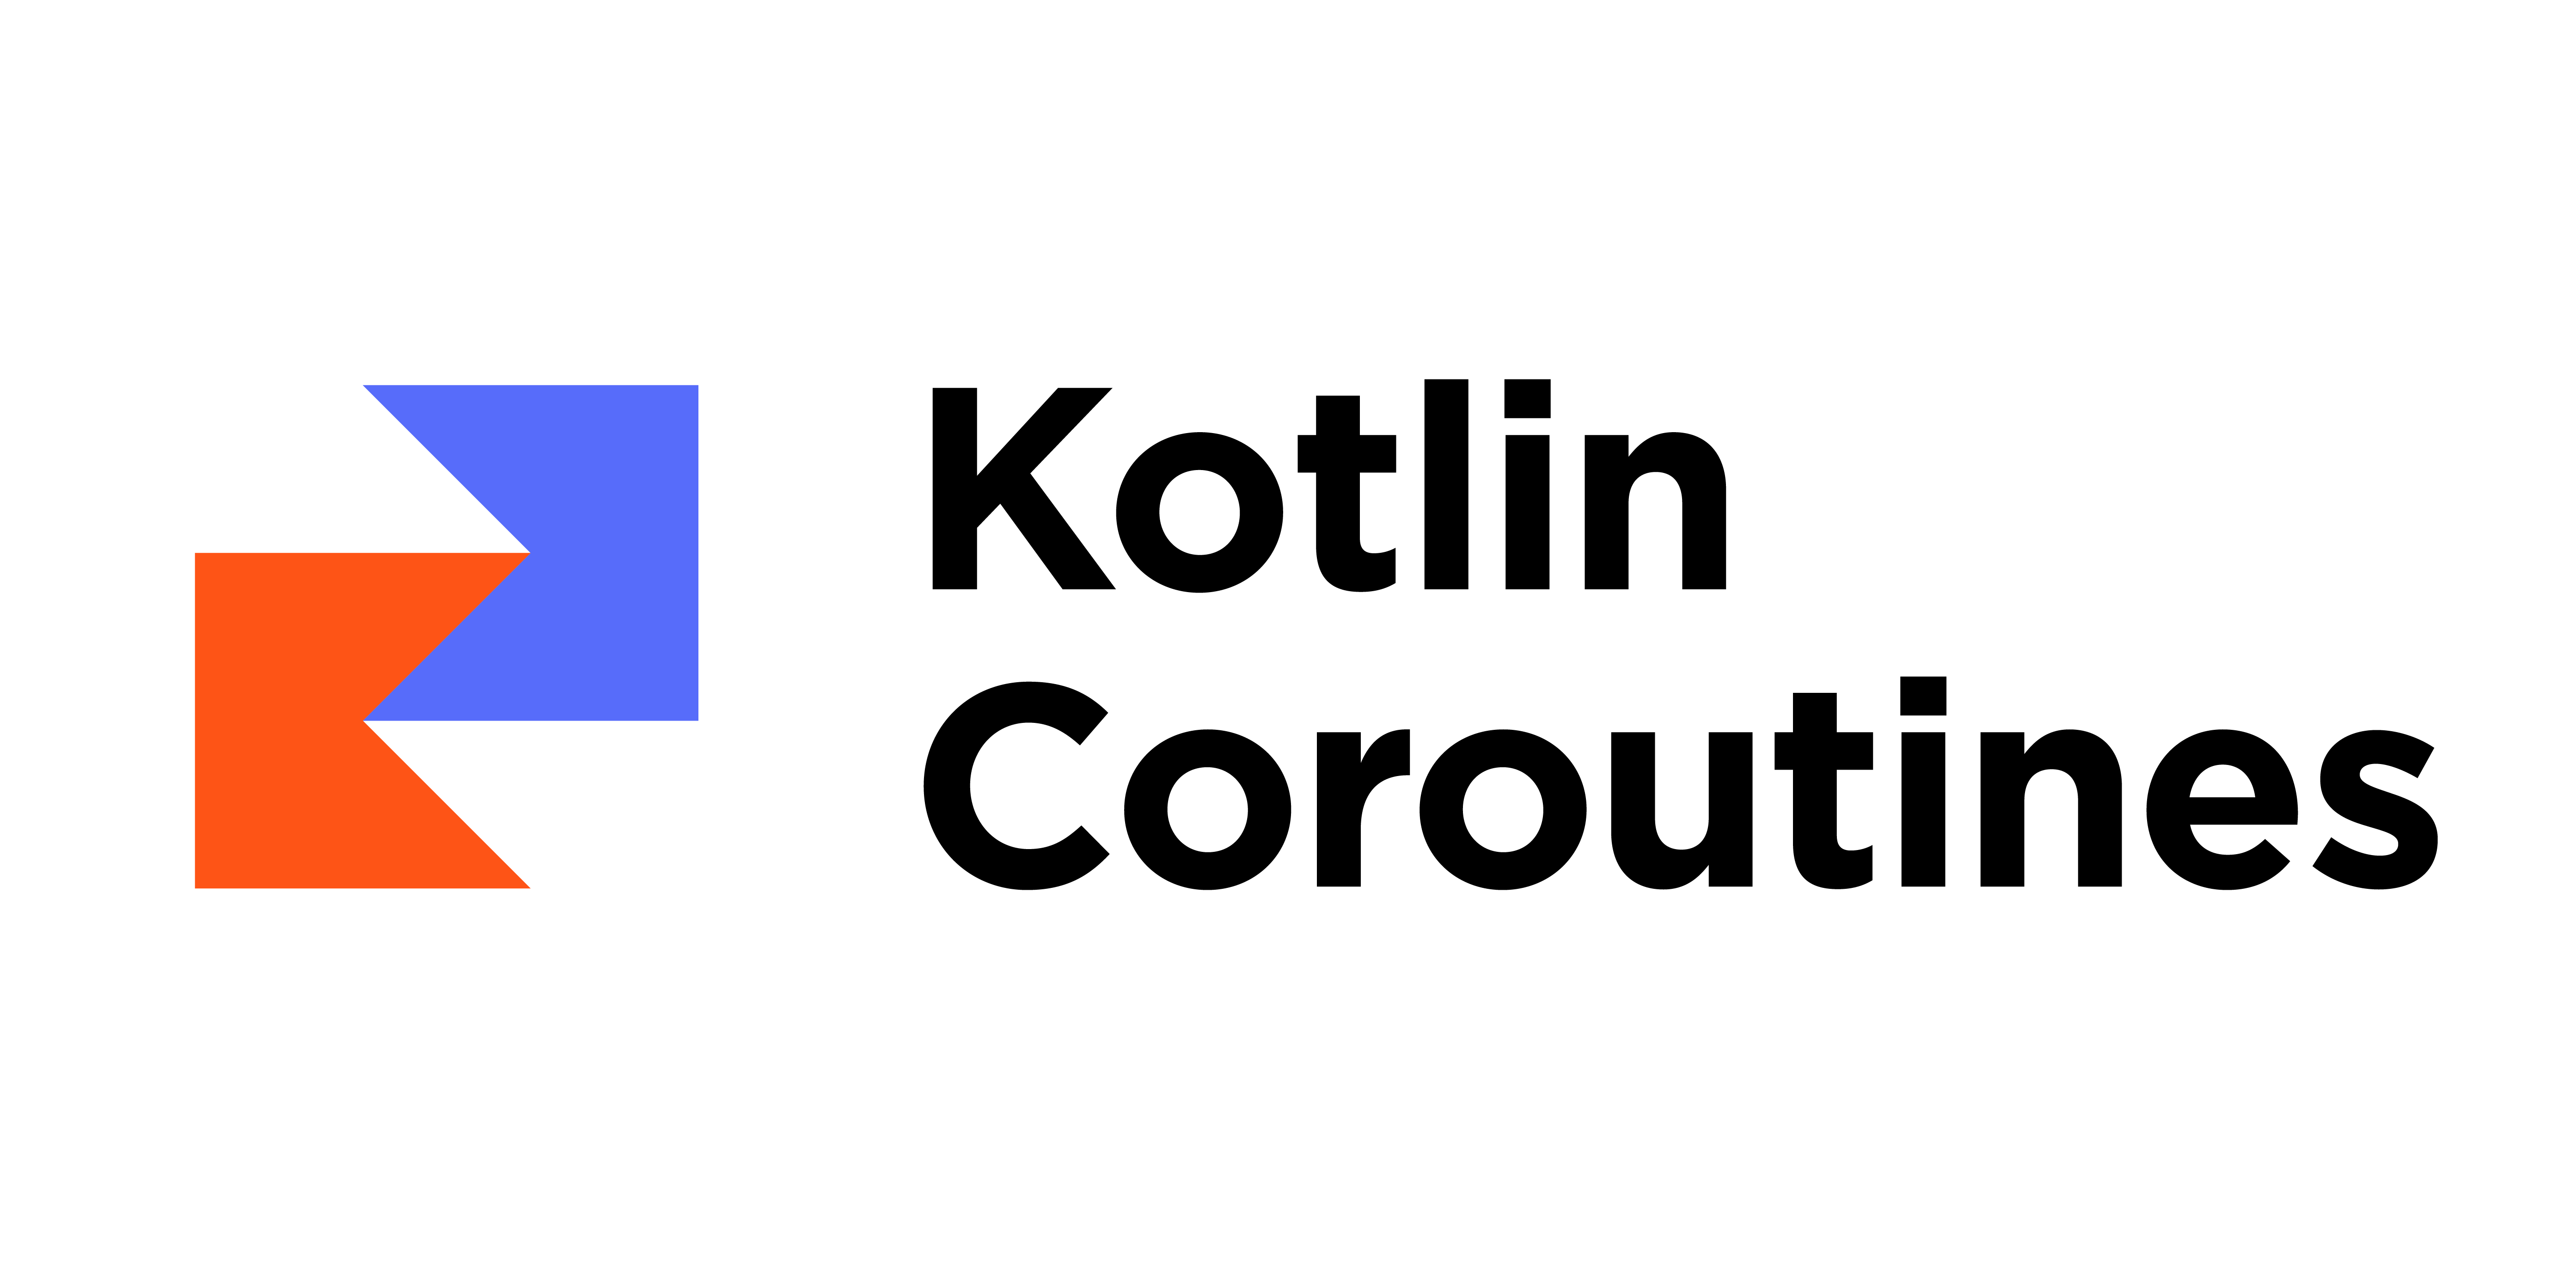 kotlinx.coroutines